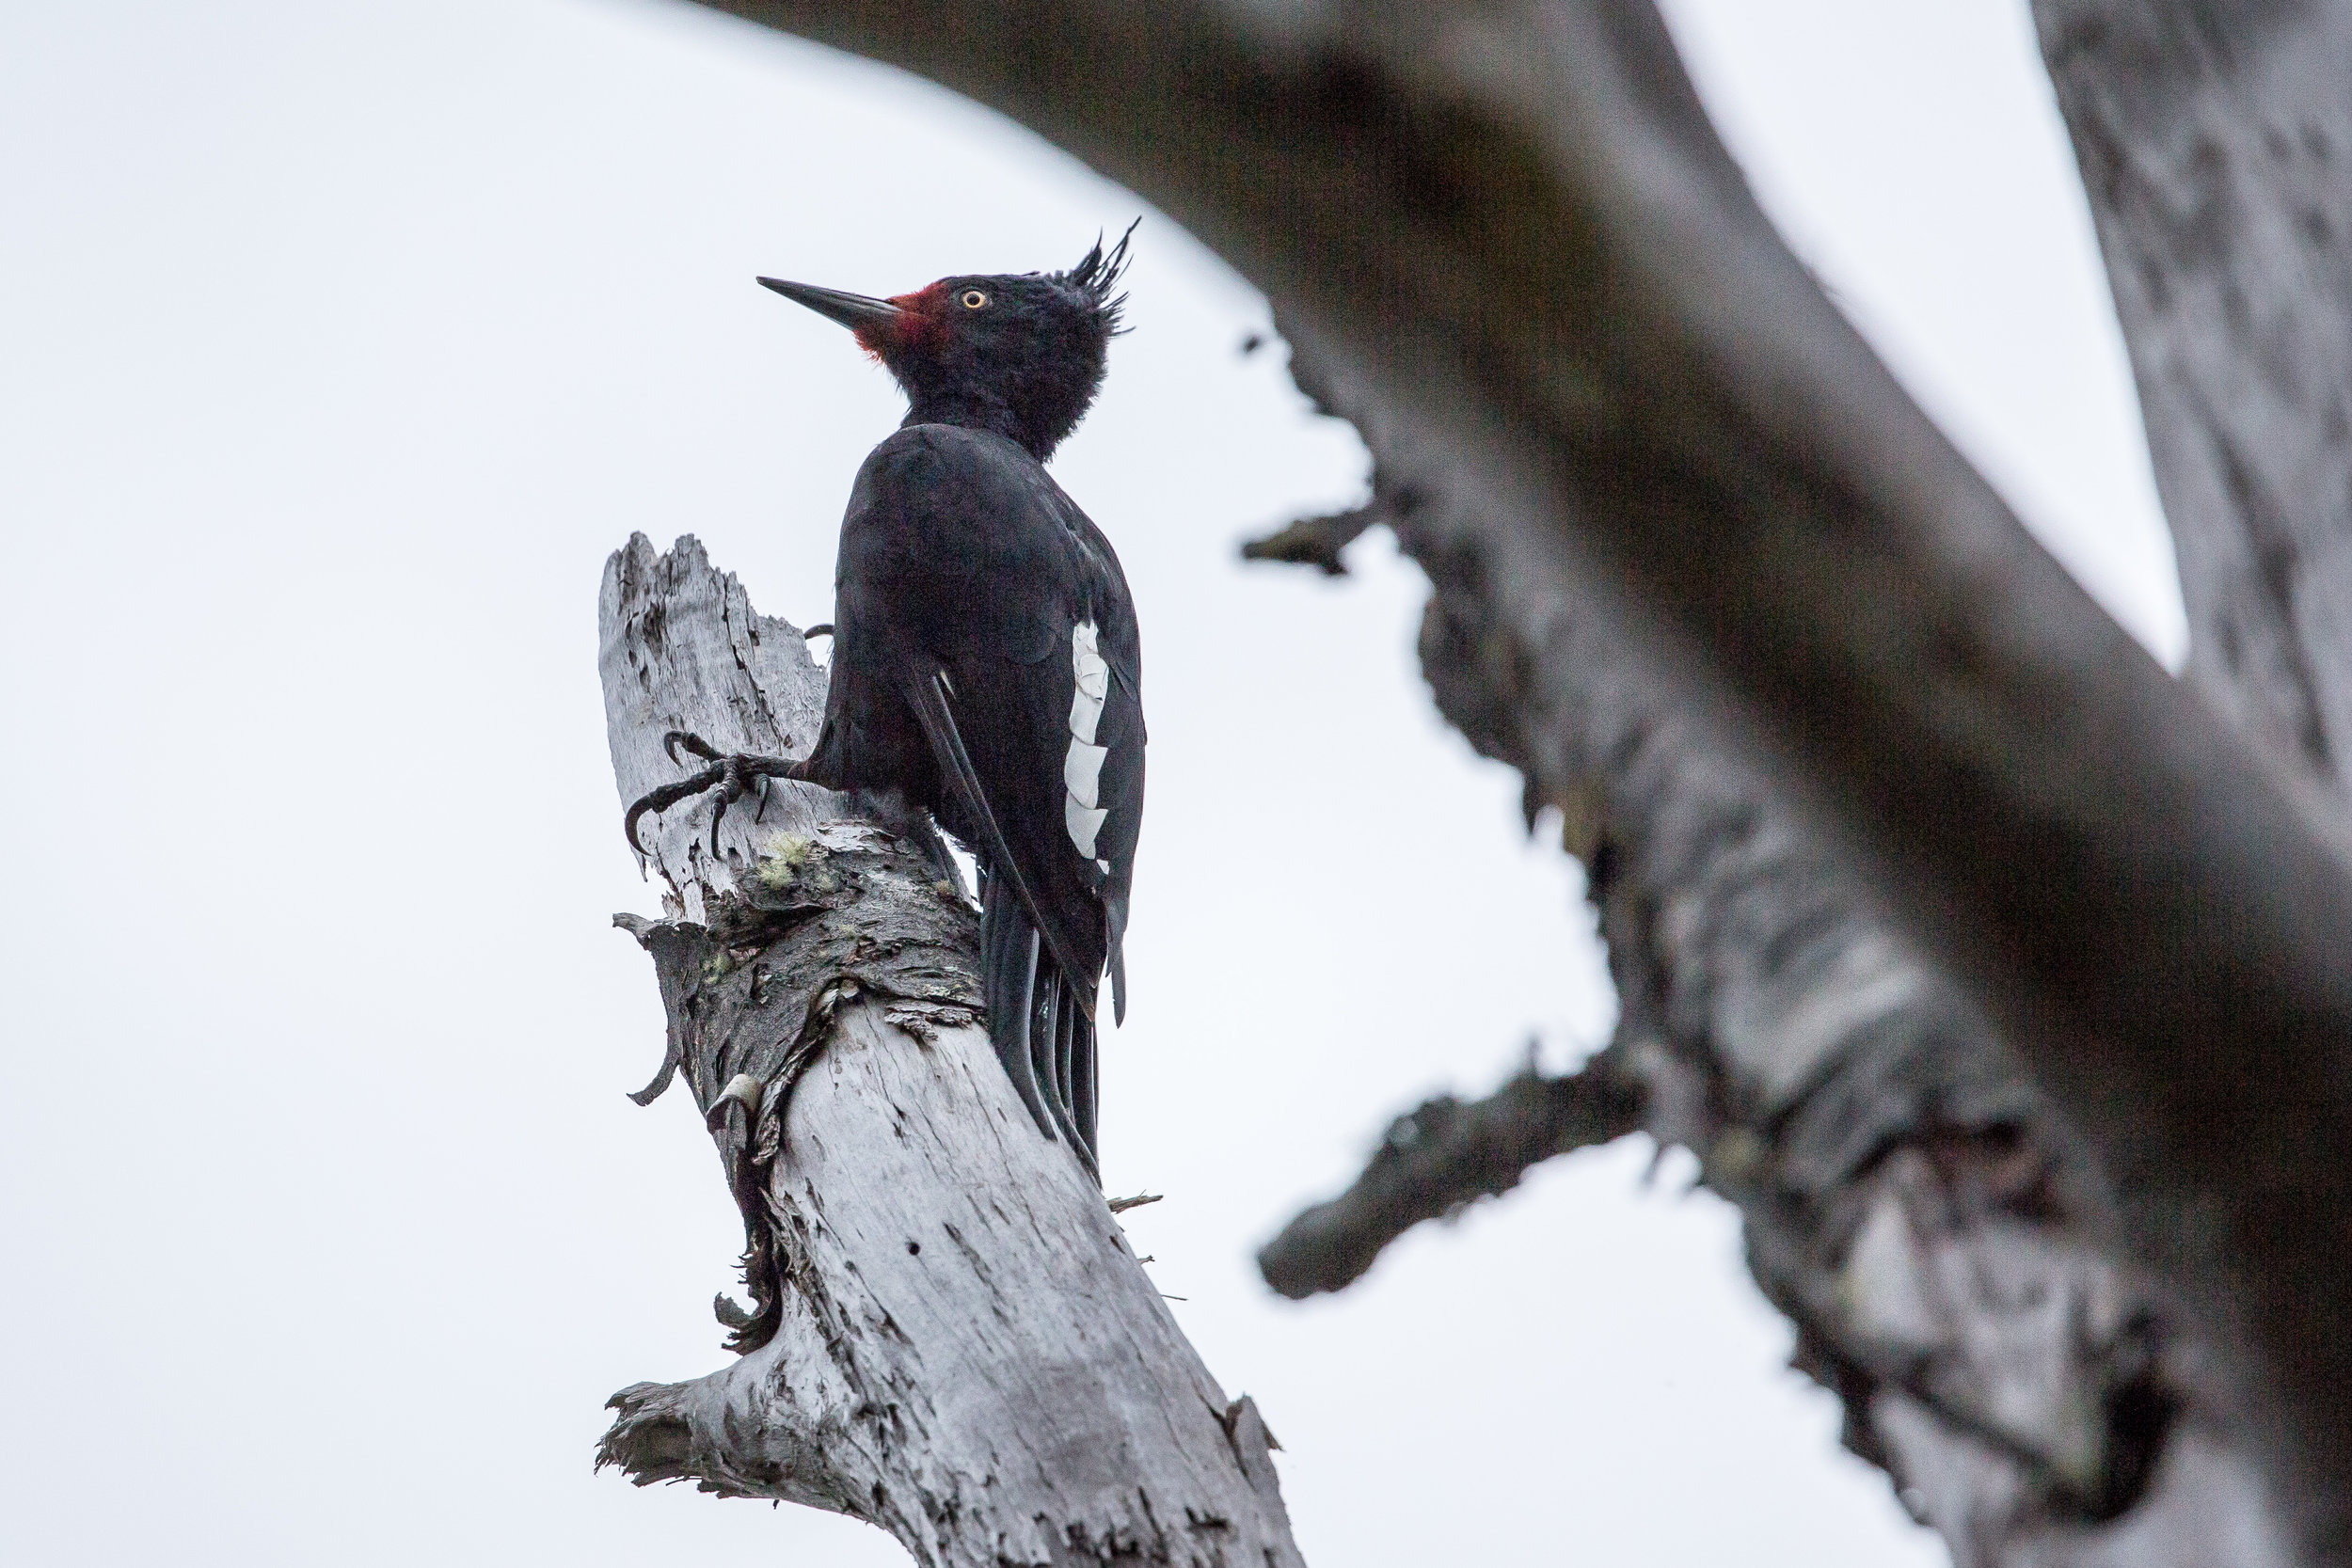 A female Magellanic woodpecker exploring a dead tree.